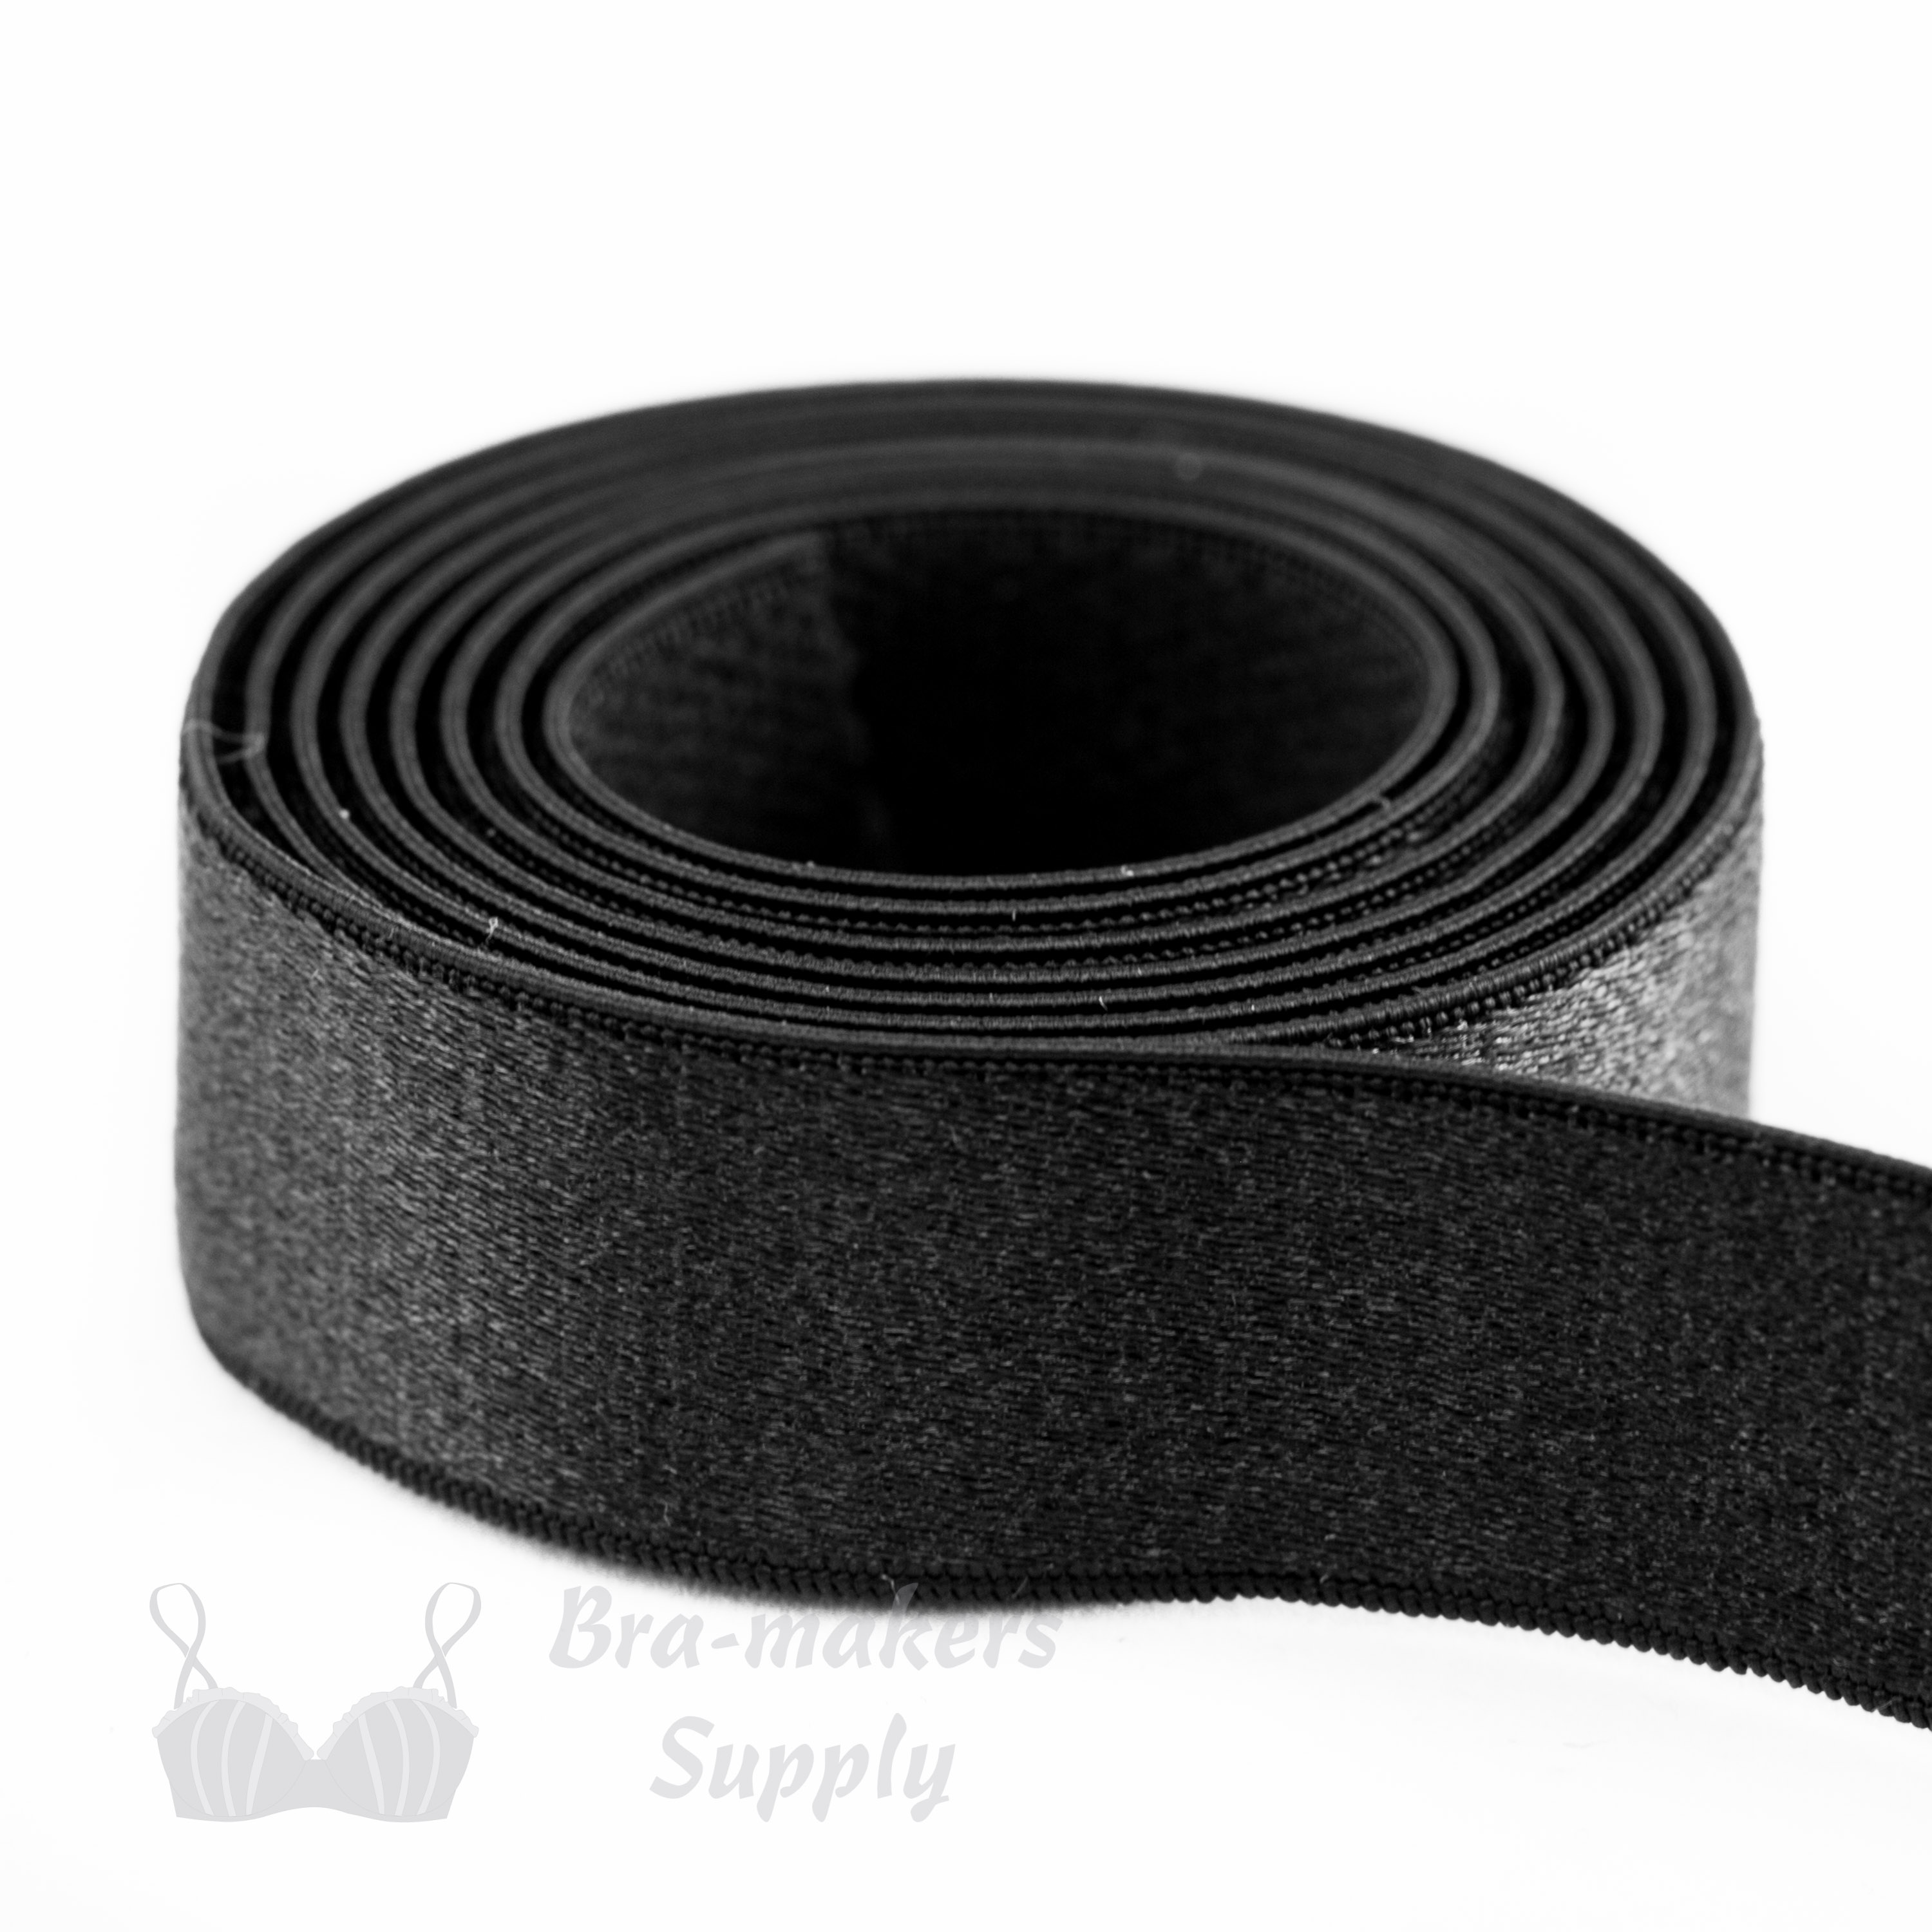 3/8 Adjustable Satin Bra Straps - Black from CorsetMakingSupplies.com